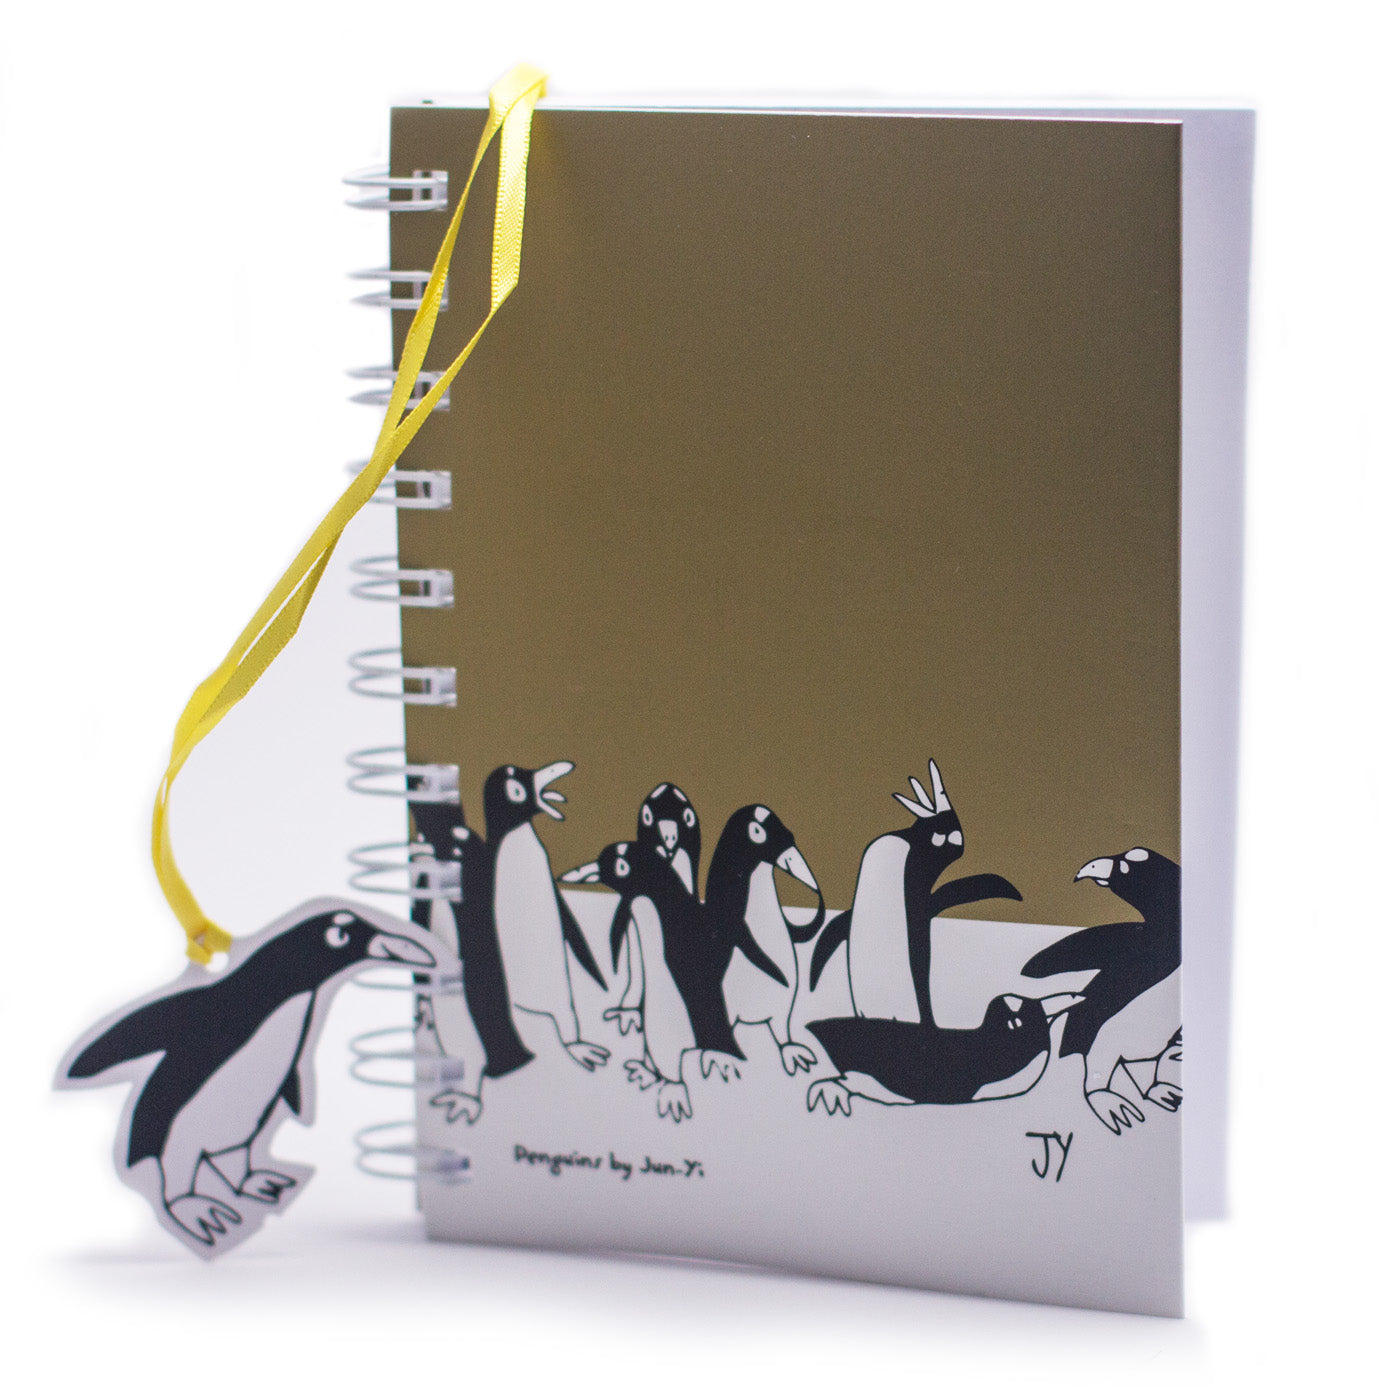 A5 Notebook - Penguin